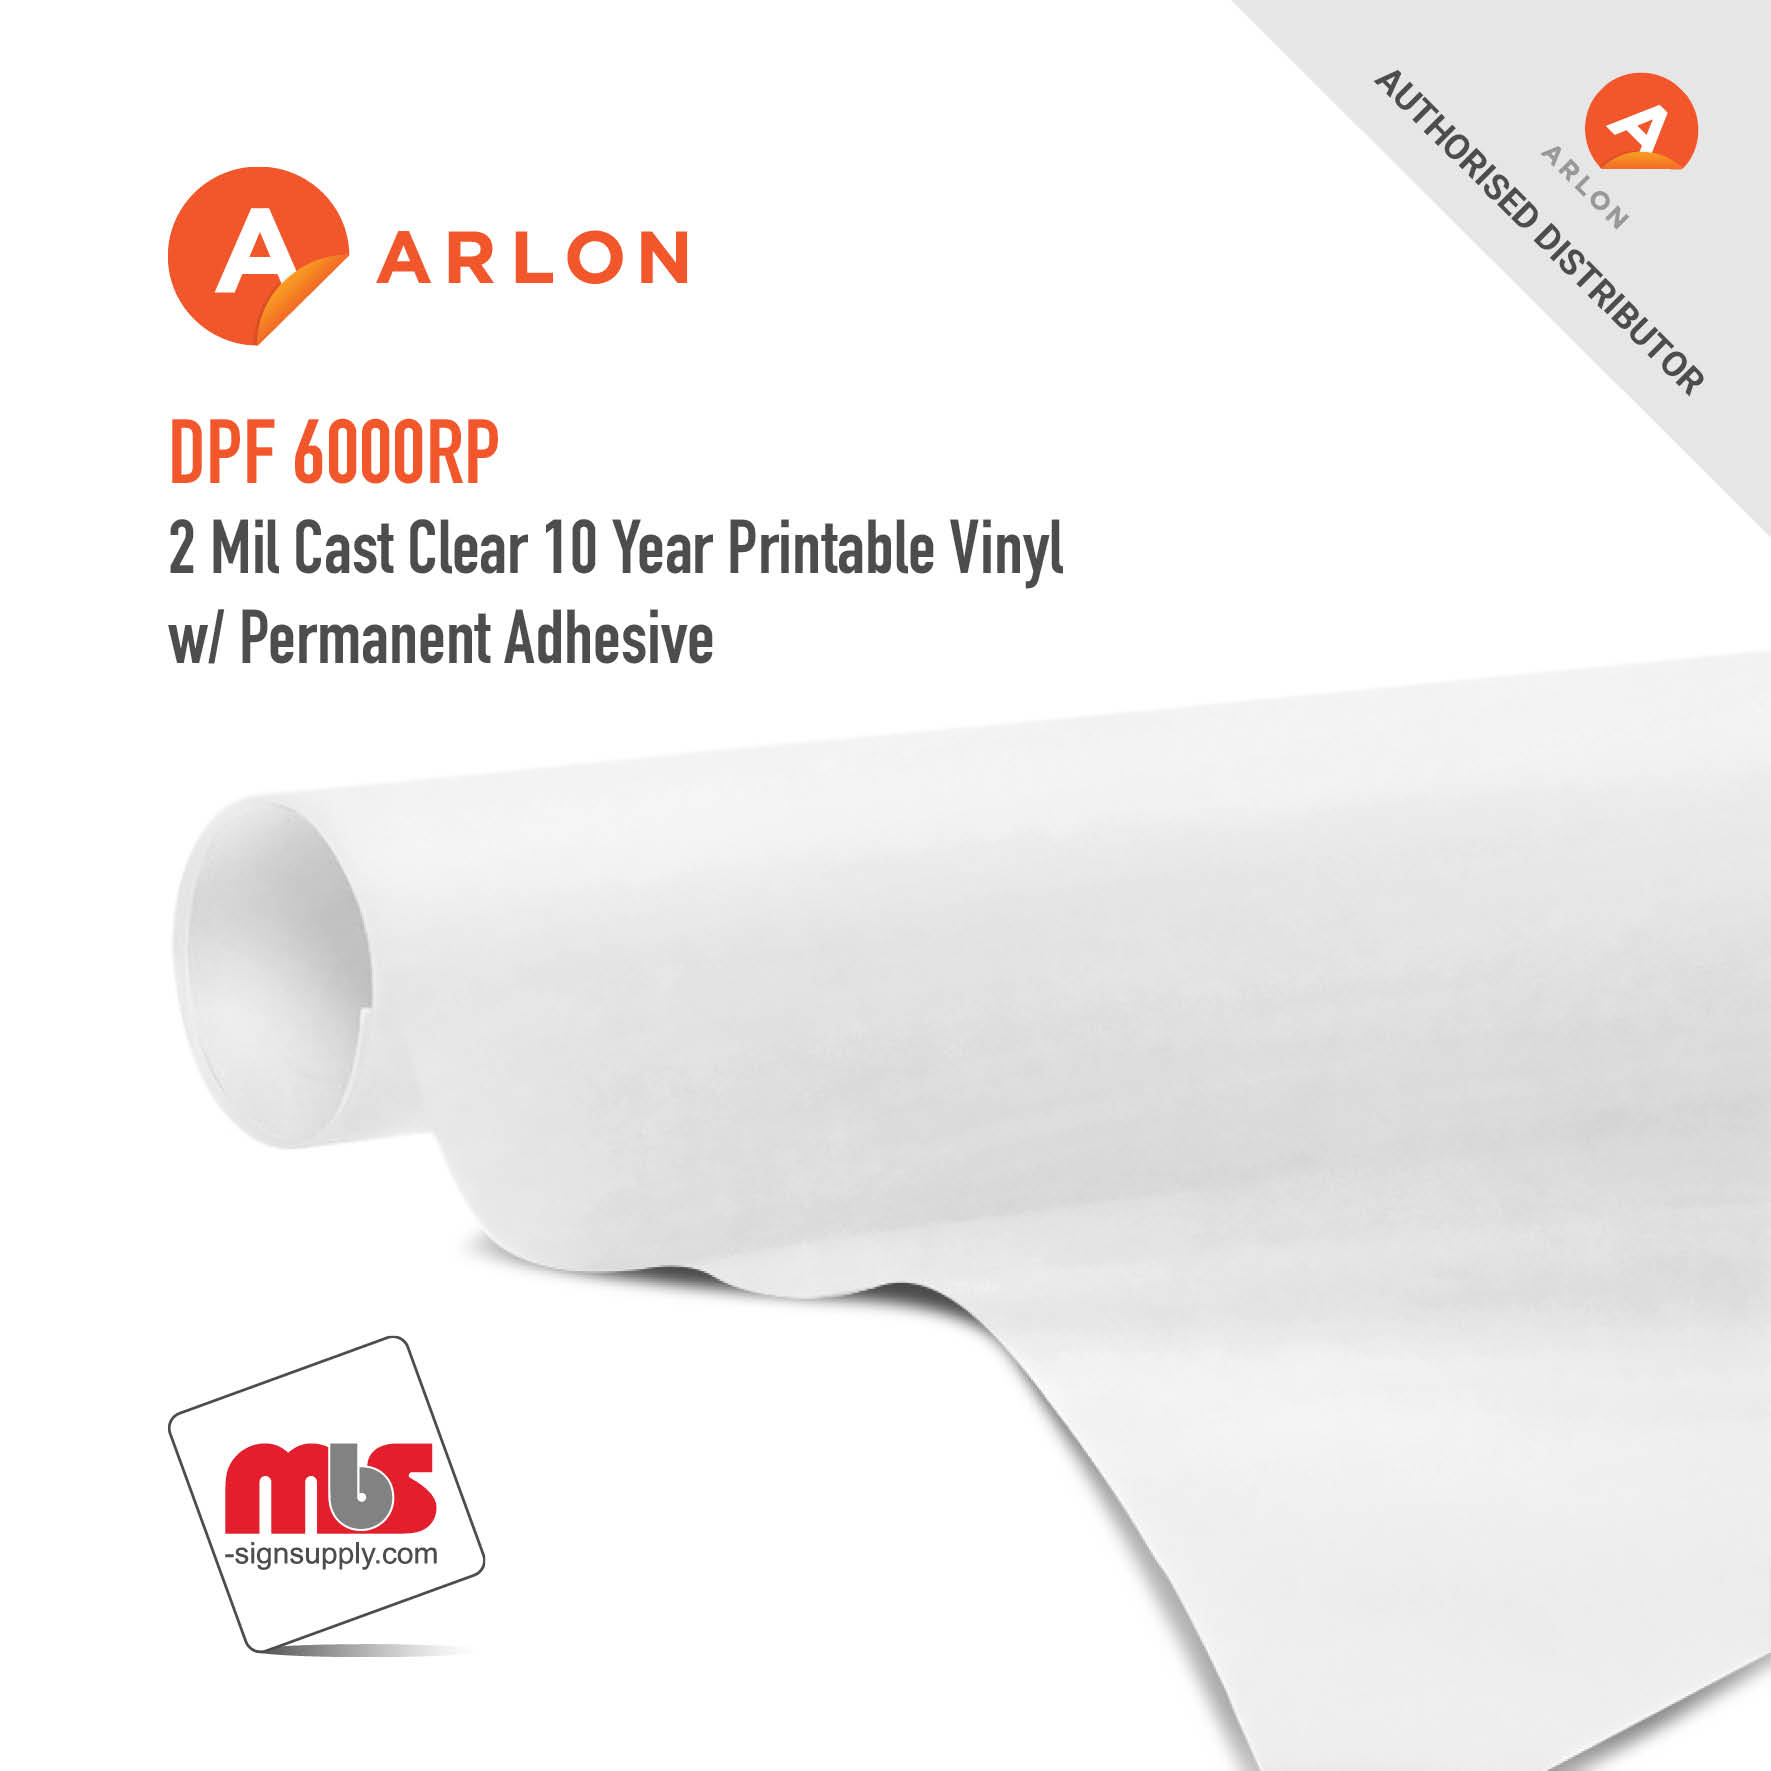 30'' x 50 Yard Roll - Arlon DPF 6000RP 2 Mil Cast Clear 10 Year Printable Vinyl w/ Permanent Adhesive